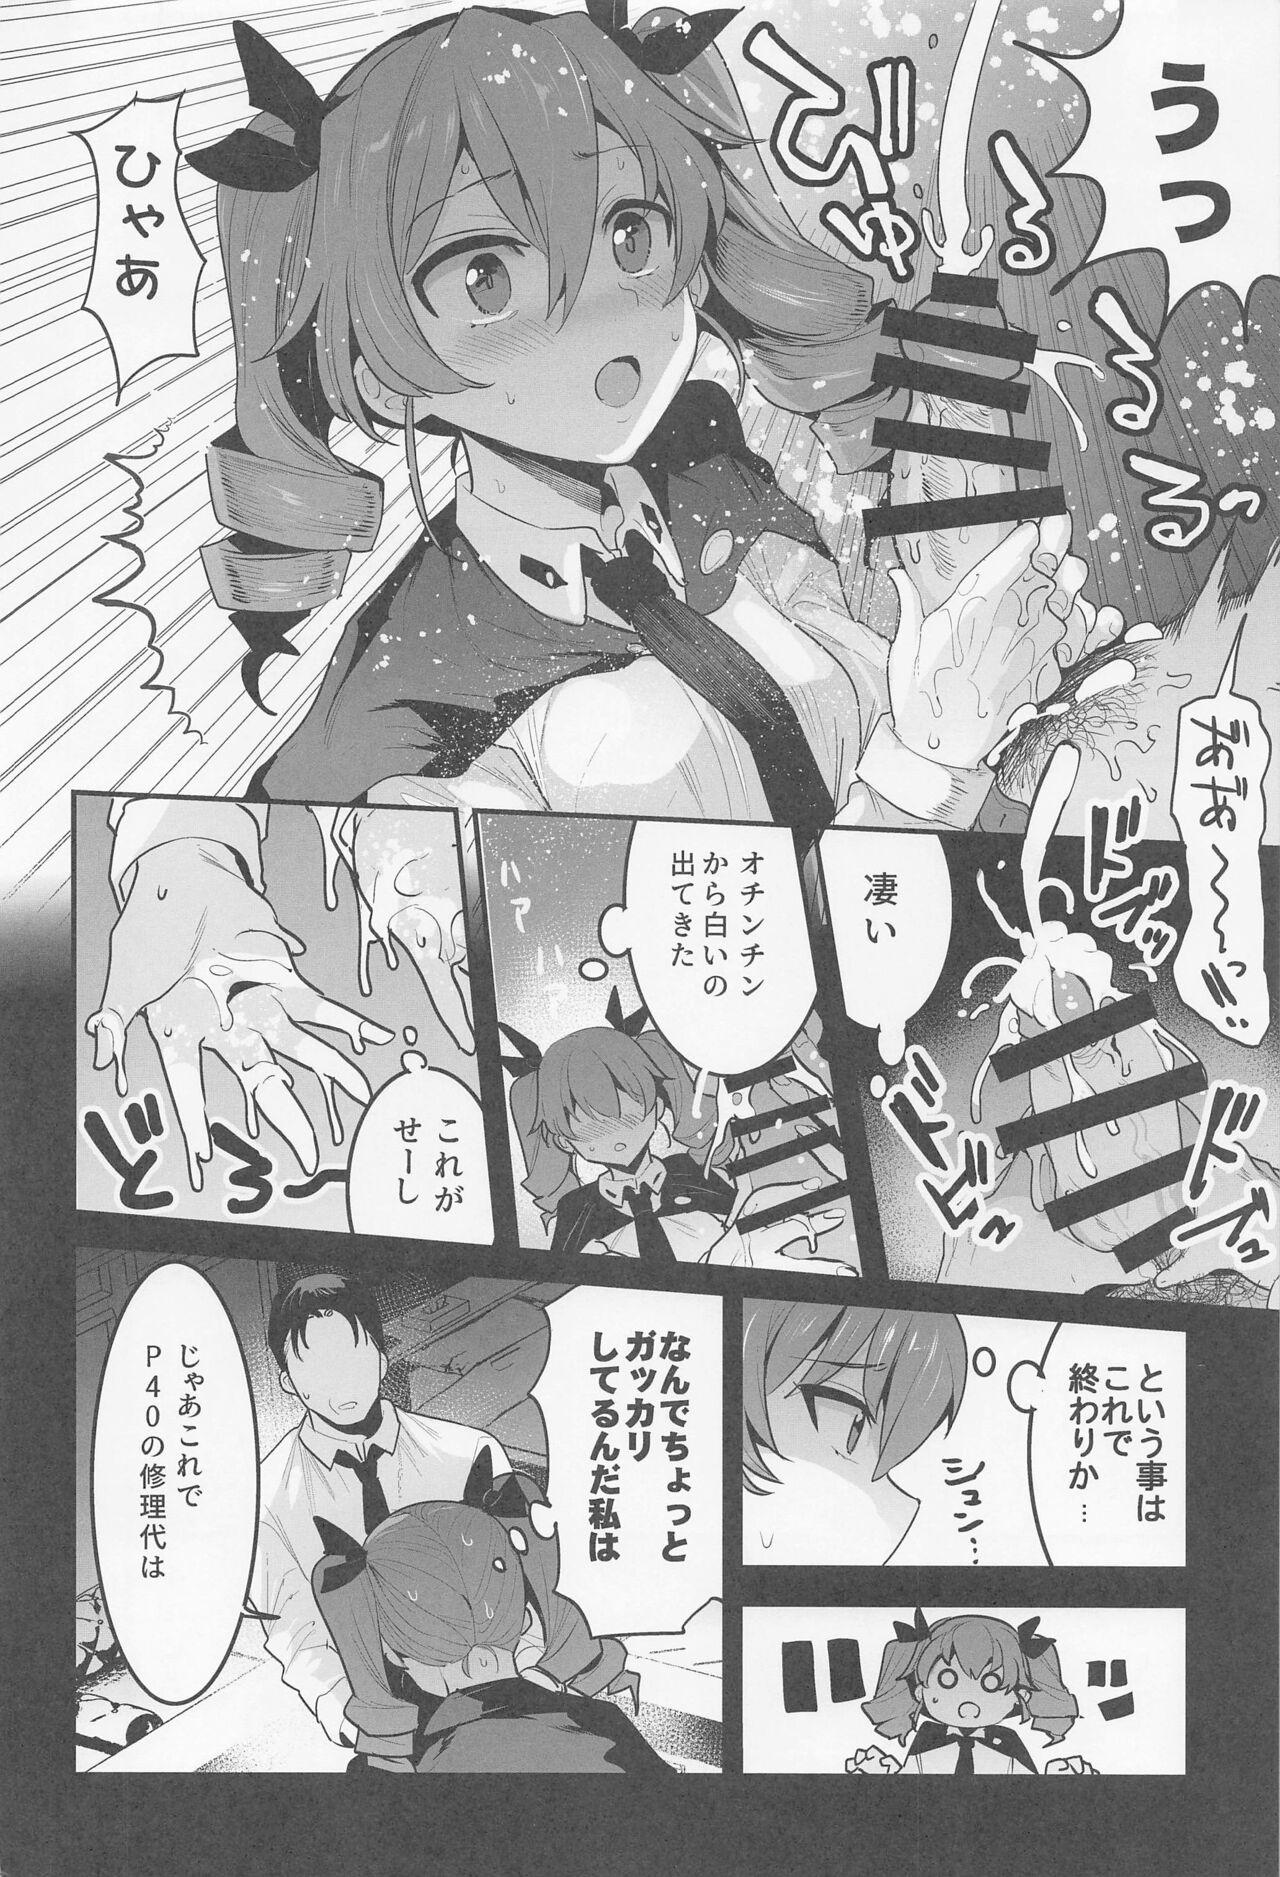 Play anchobi dogezadeonegaishitaraippatsuyarasetekuremashita - Girls und panzer Soft - Page 9